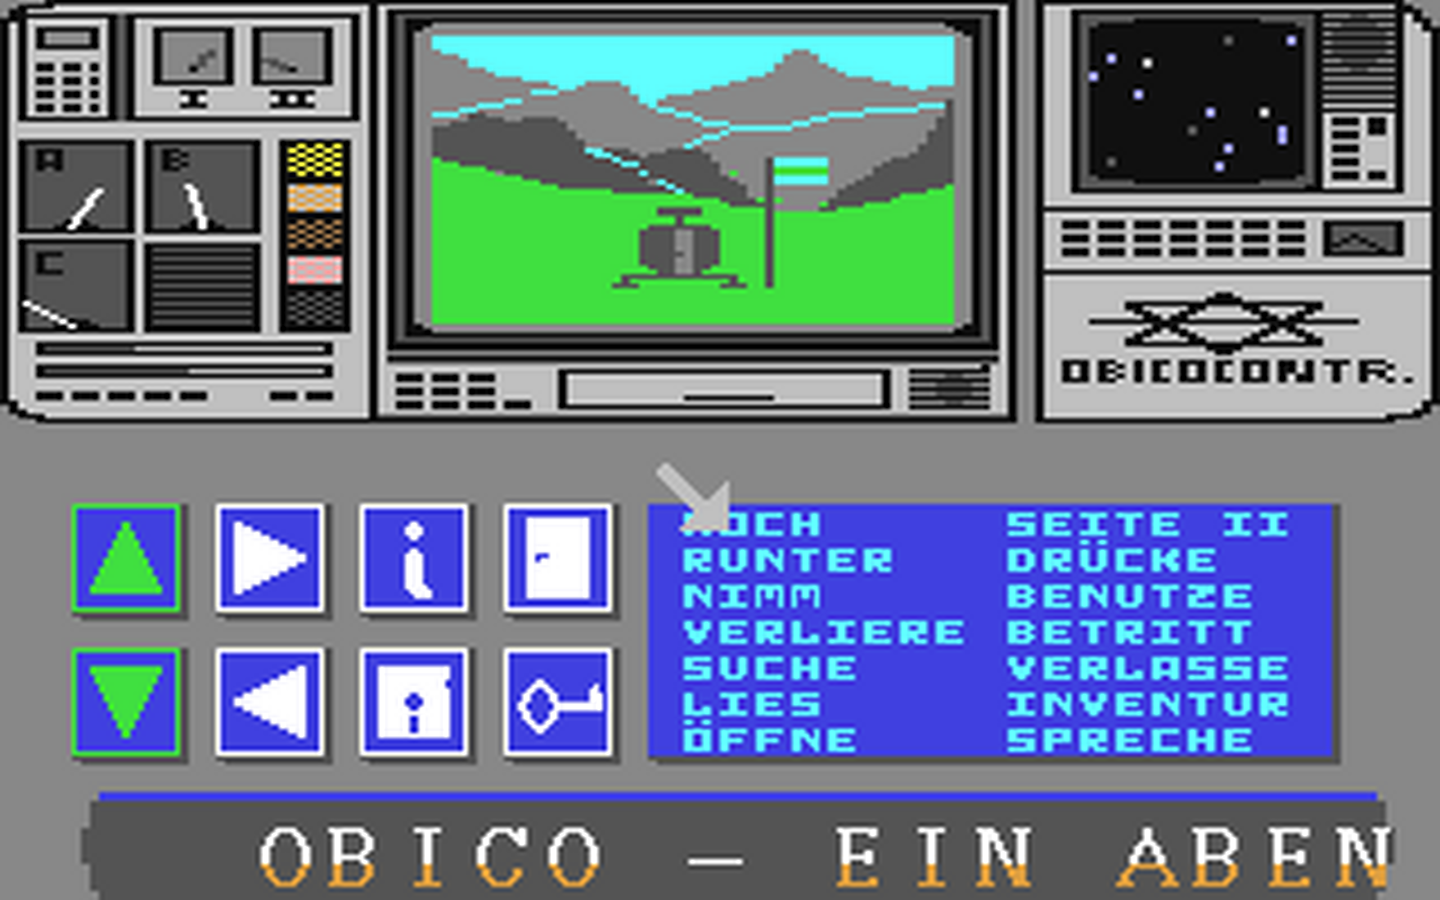 C64 GameBase Obico Logo_Software_GmbH 1991